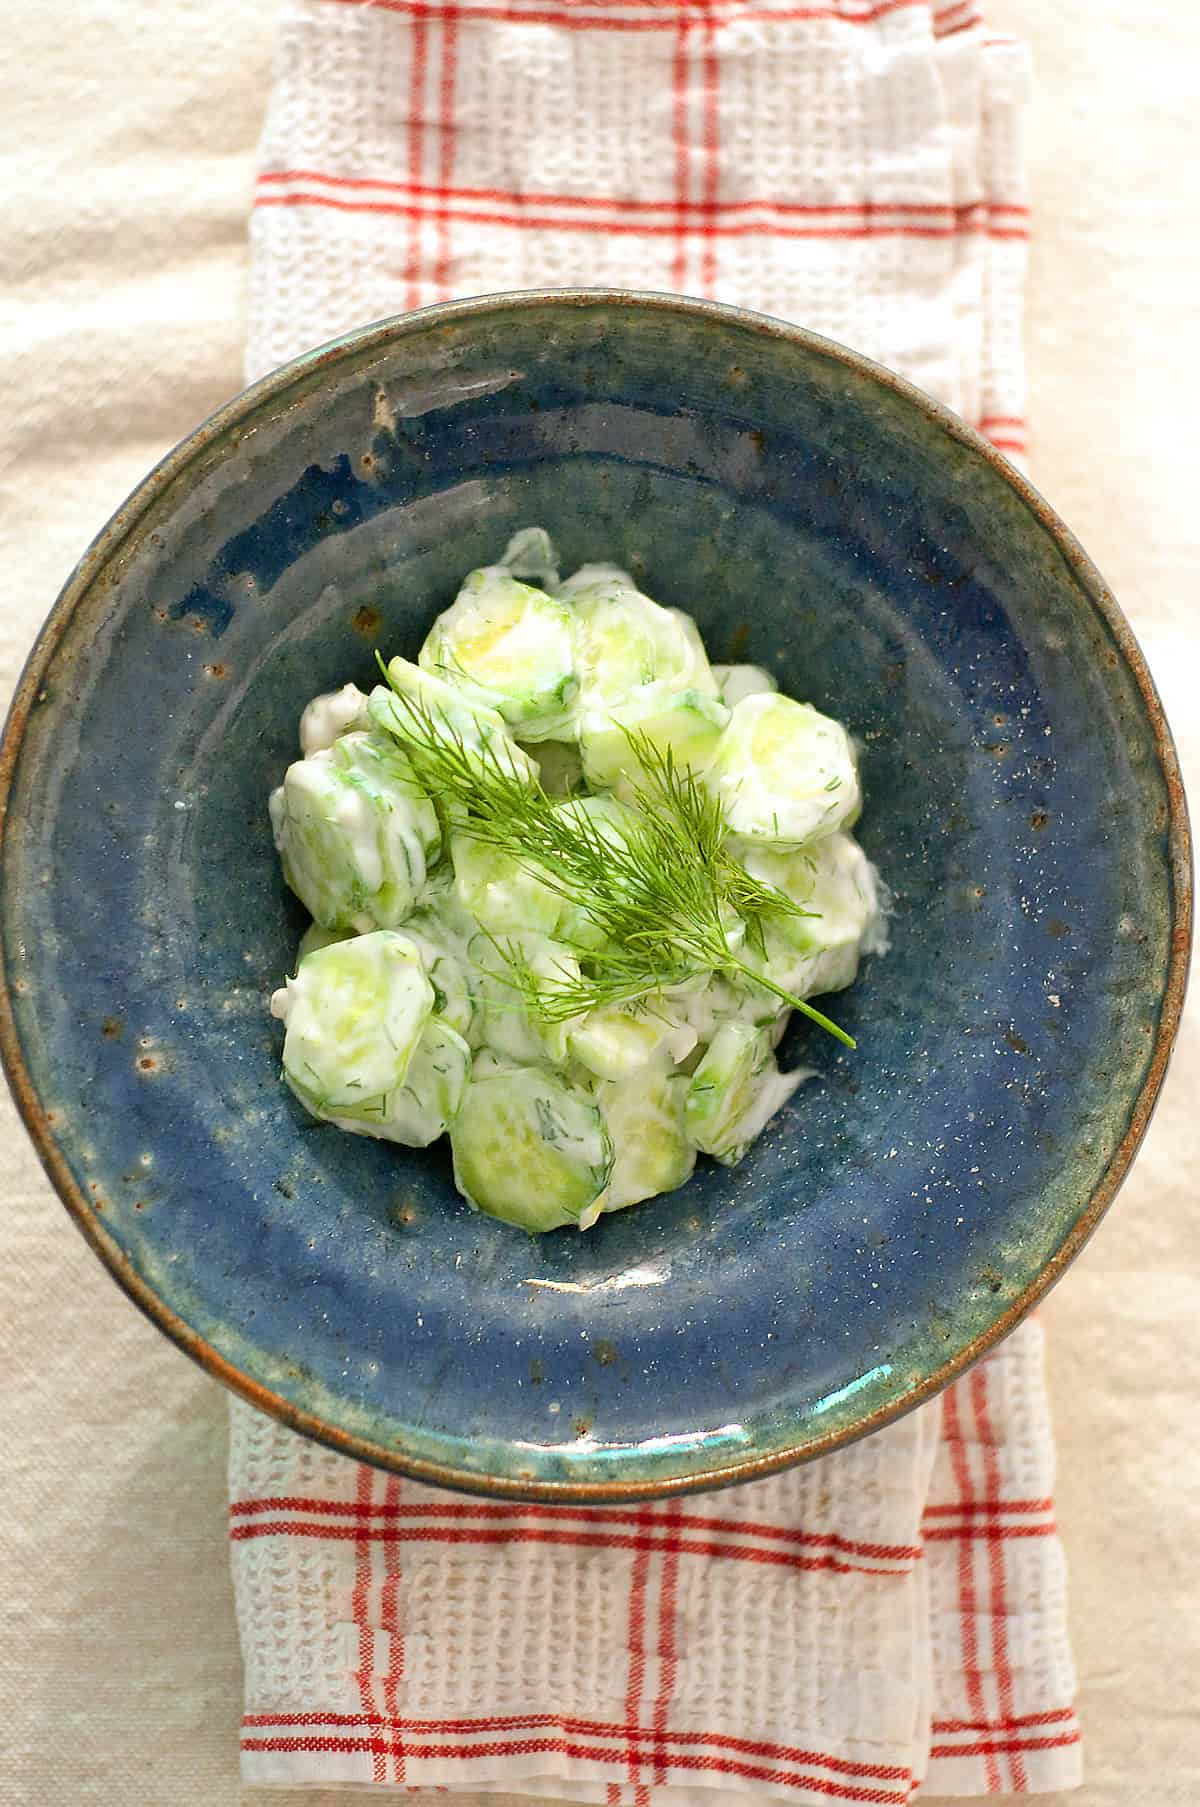 Creamy cucumber salad in a blue bowl.